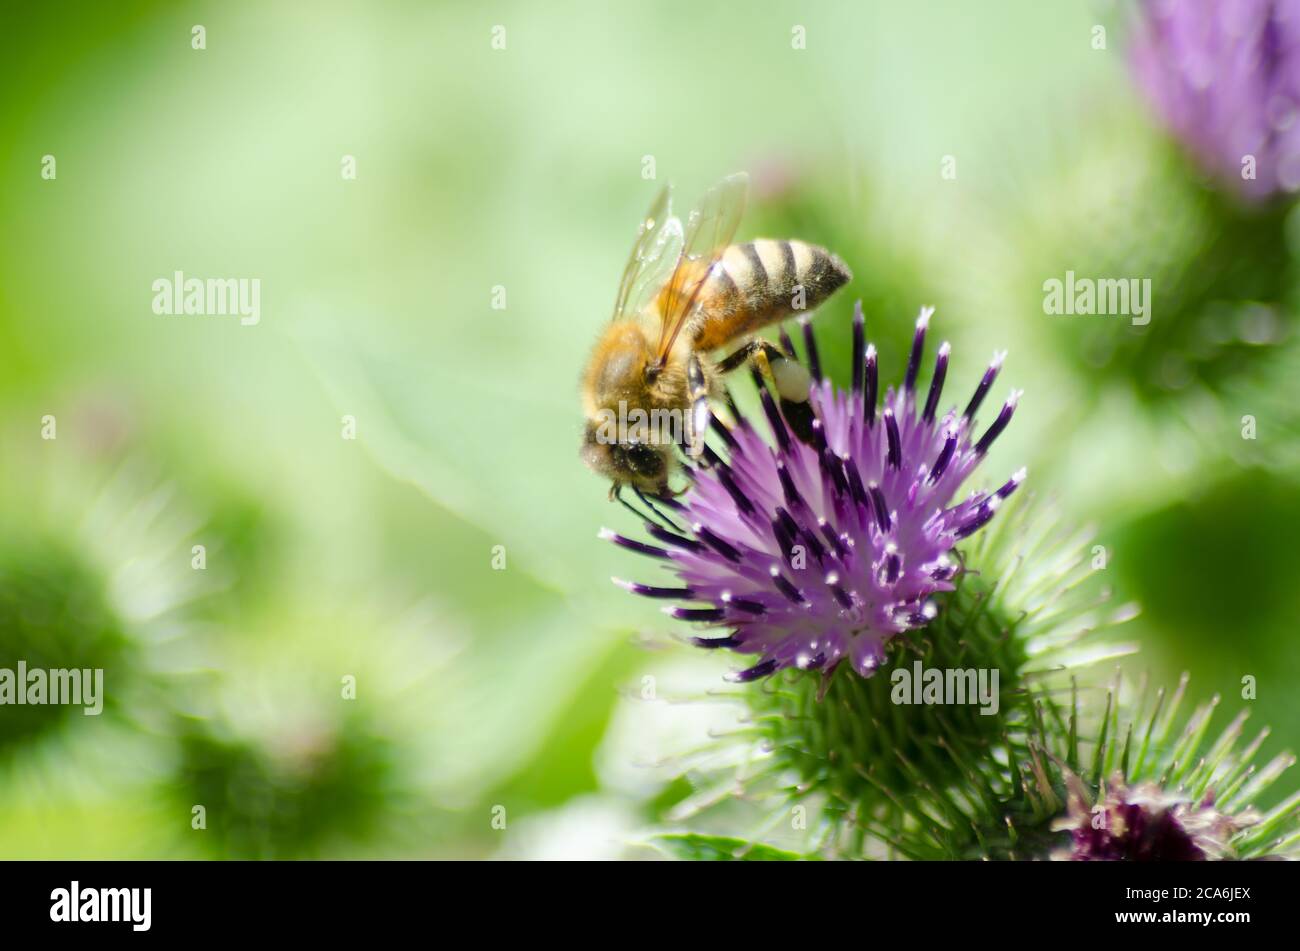 A Western Honey Bee (Apis mellifera) on a thistle Stock Photo